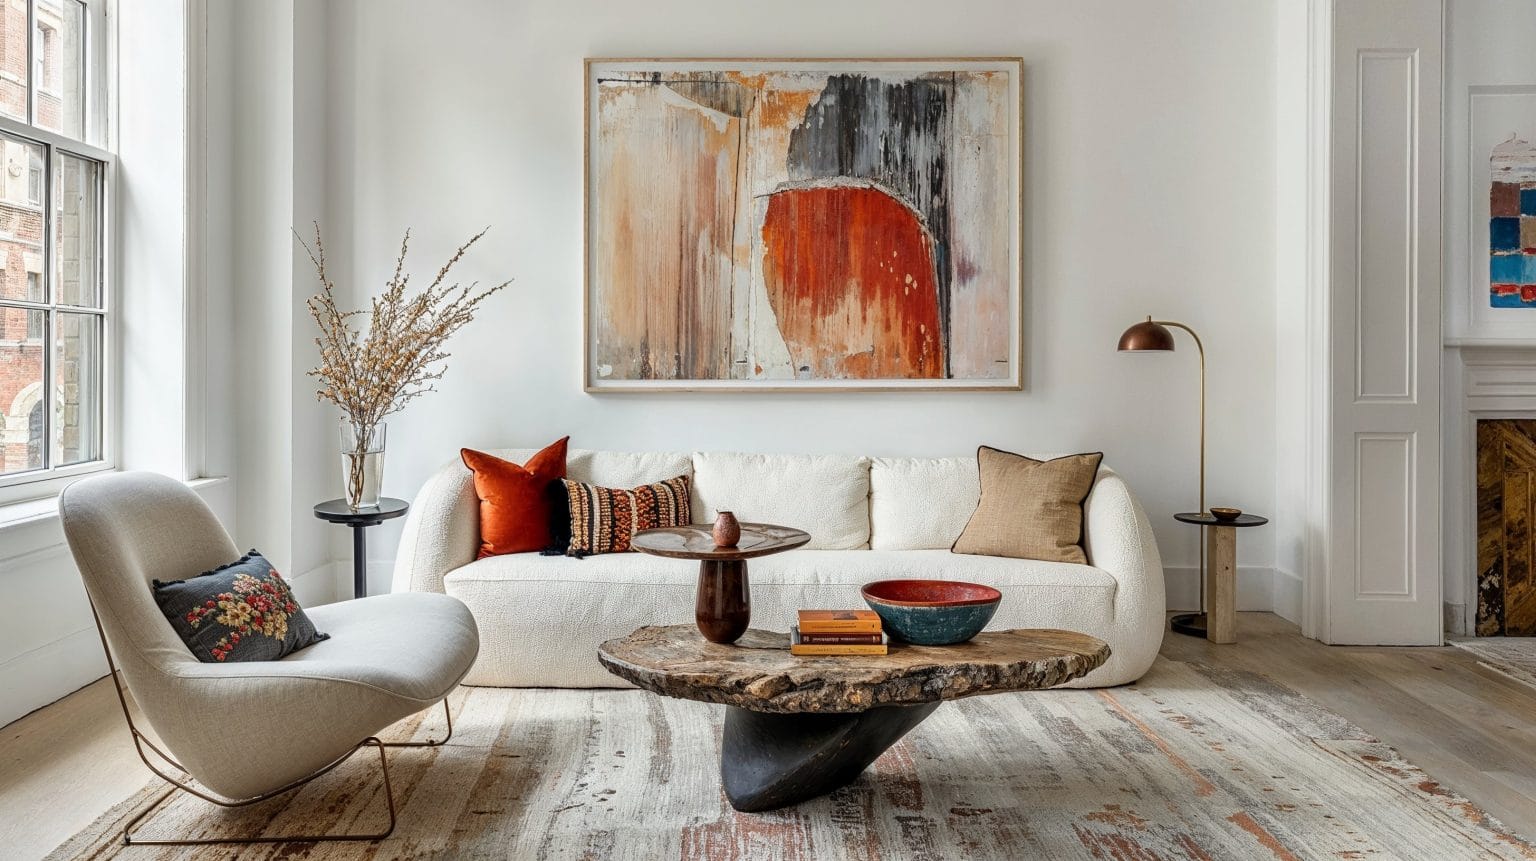 Before & After: Rustic Scandinavian Living Room Design - Decorilla ...